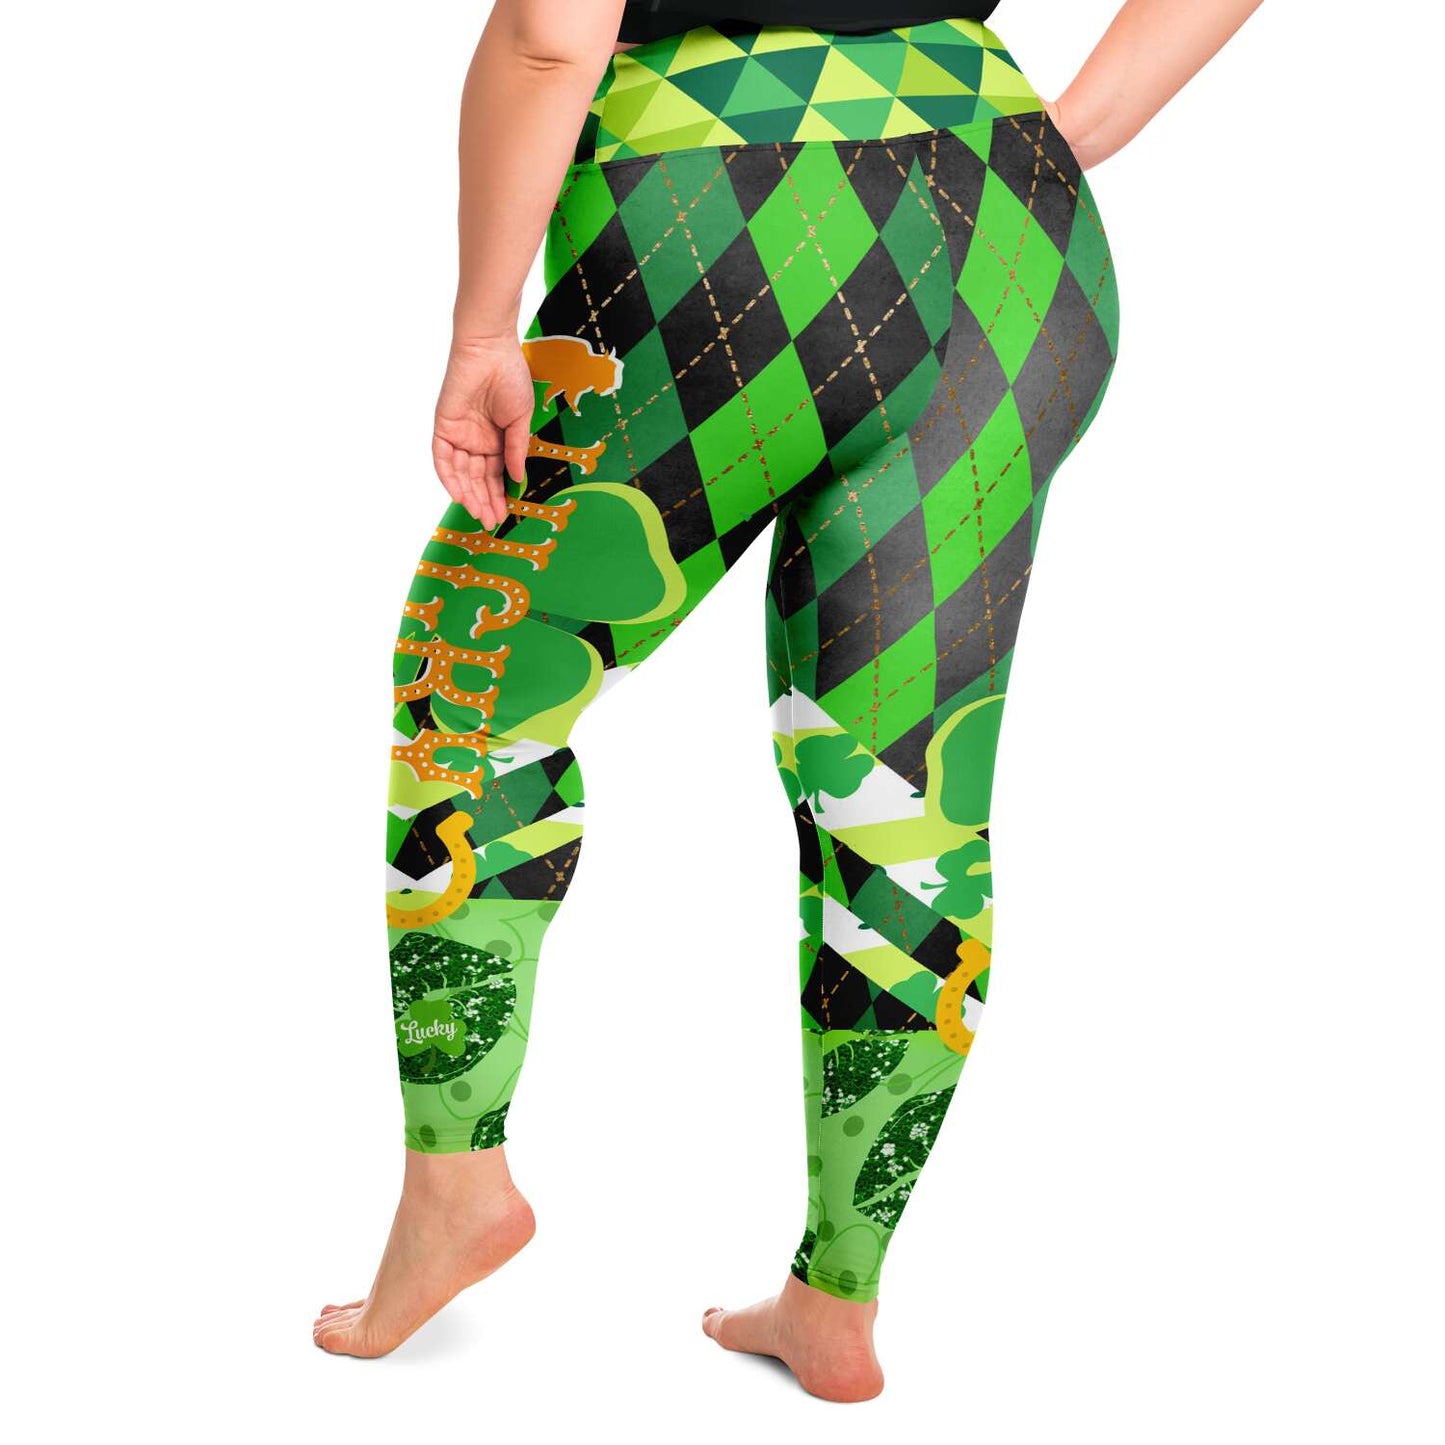 Curvy St Patricks Day Yoga pants Plus size 2XL -6XL